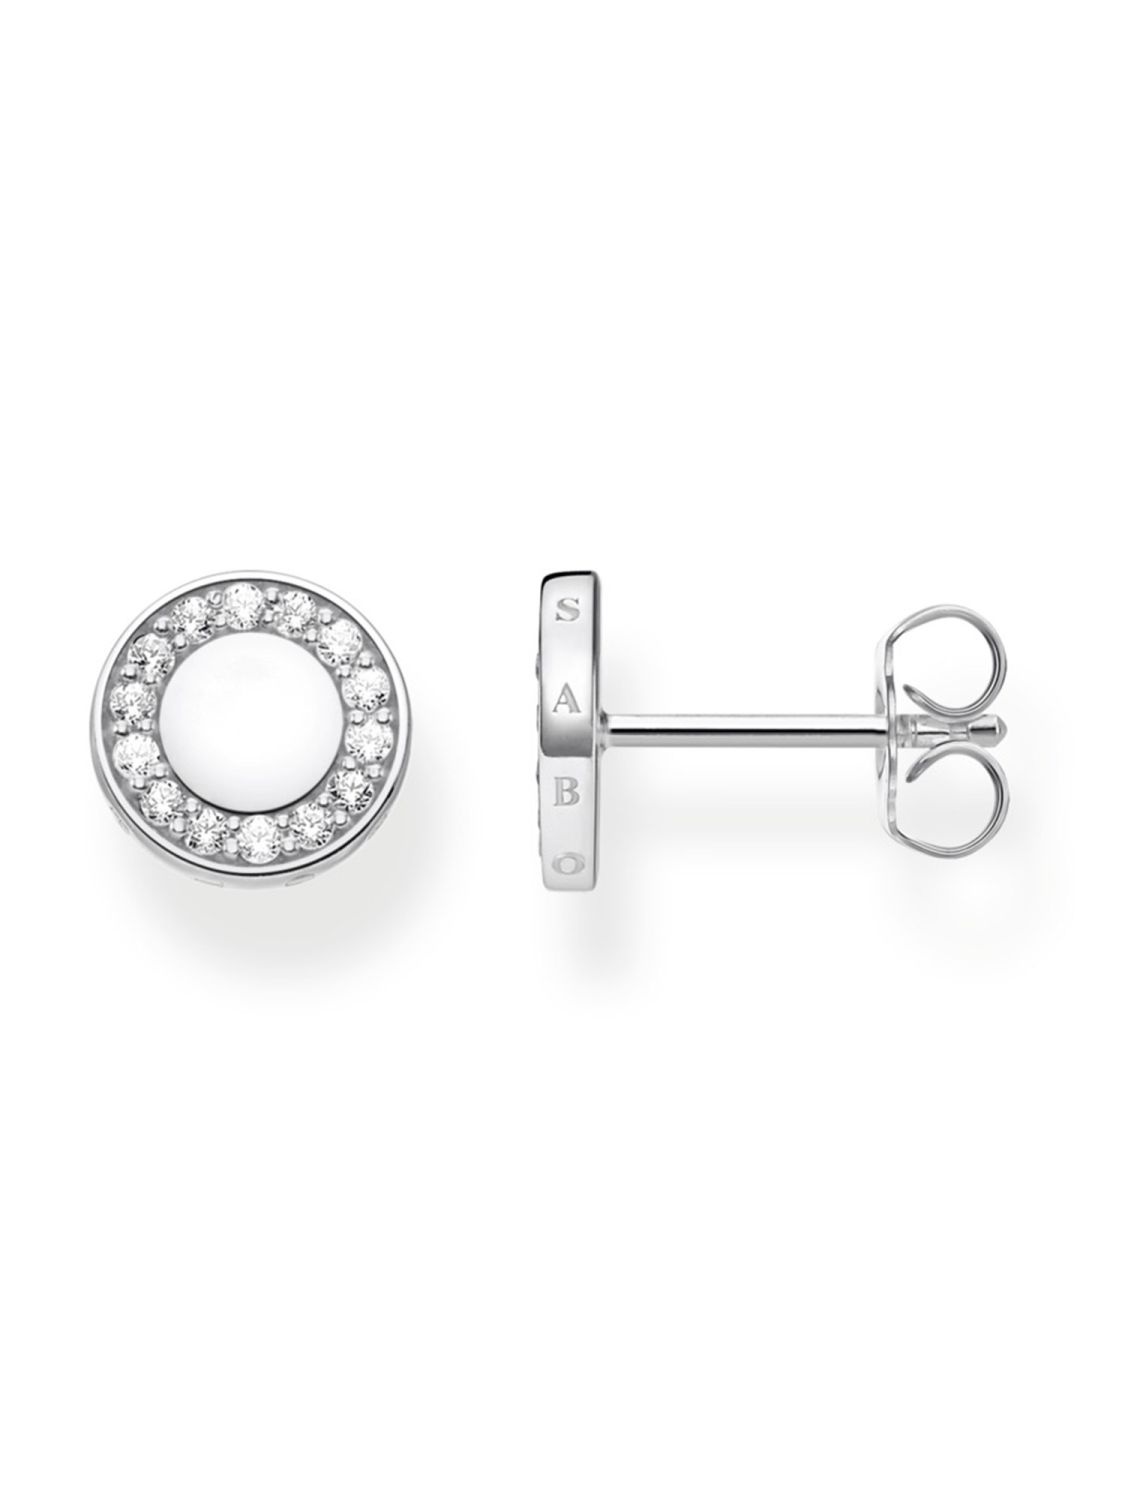 Thomas Sabo Ladies' Silver Stud Earrings Circles H2061-051-14 • uhrcenter